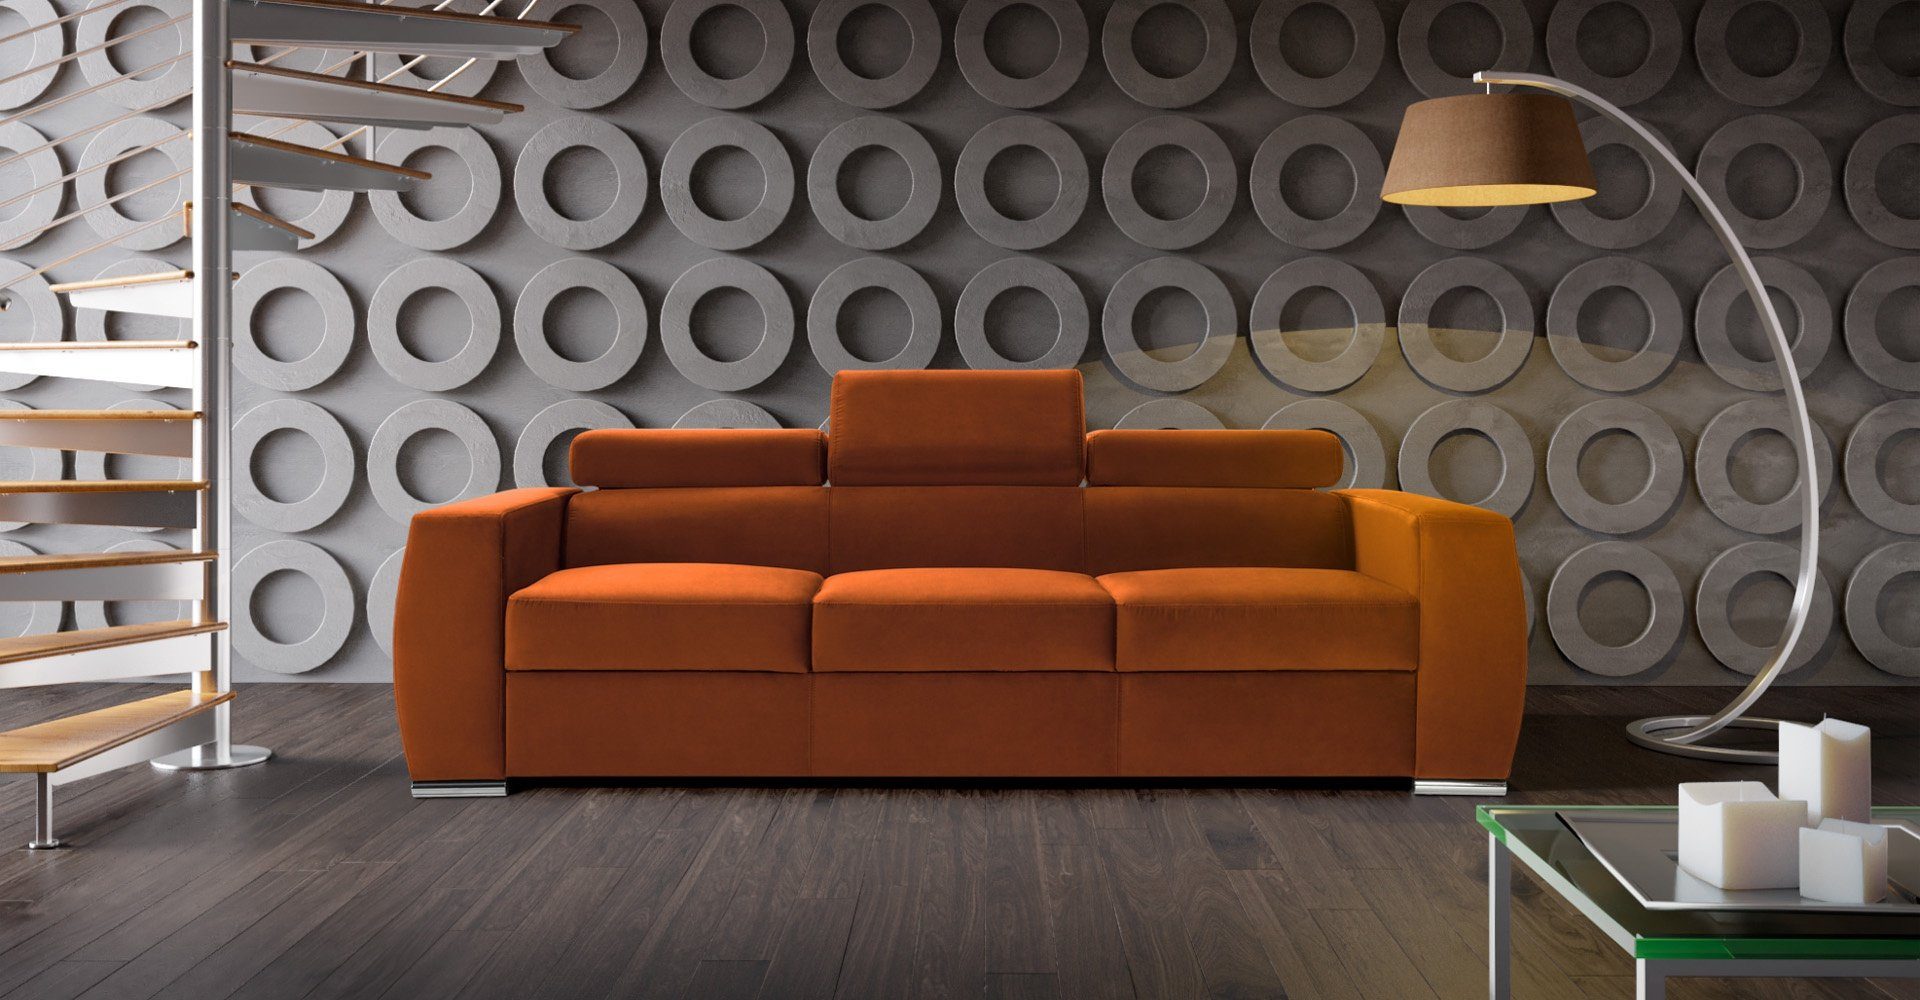 JVmoebel Sofa Sofagarnitur Bettfunktion Design Polster Stoff Sofas 3+3 Sitzer, Mit Bettfunktion. Orange